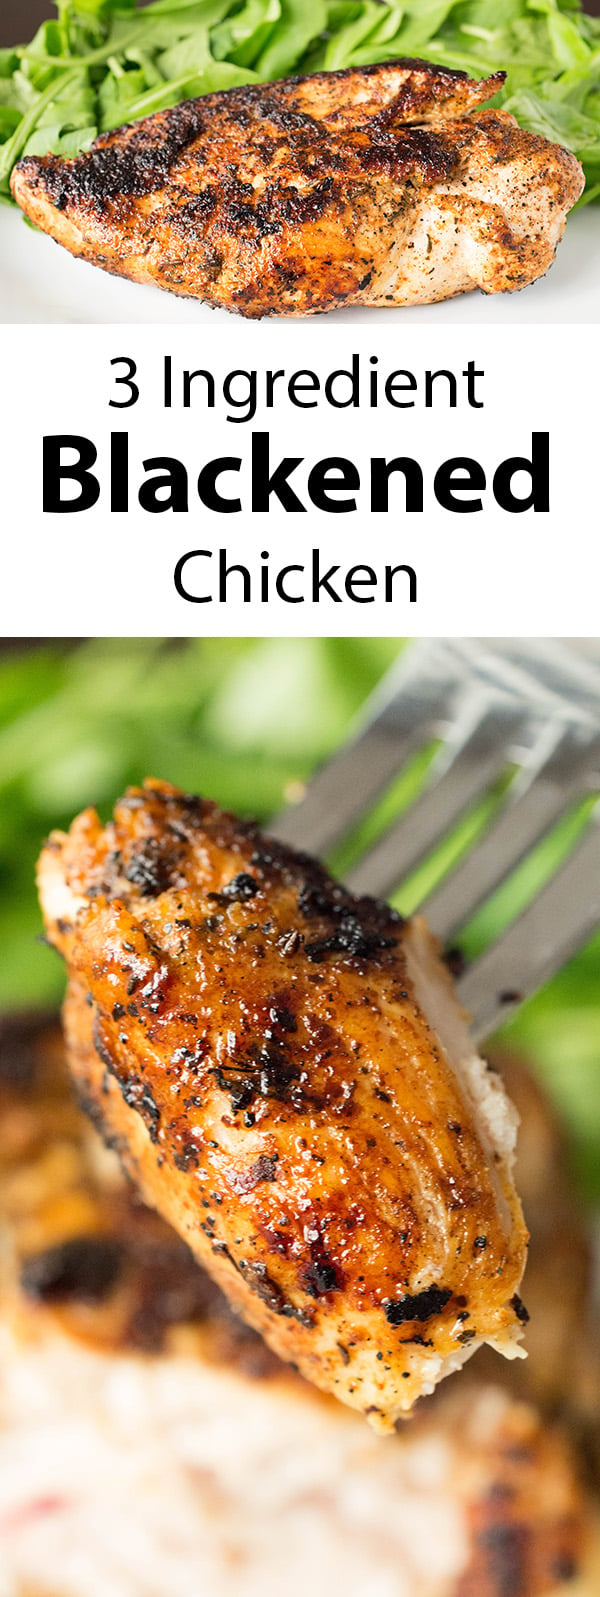 One of our favorite weeknight meals: easy, three ingredient blackened chicken.